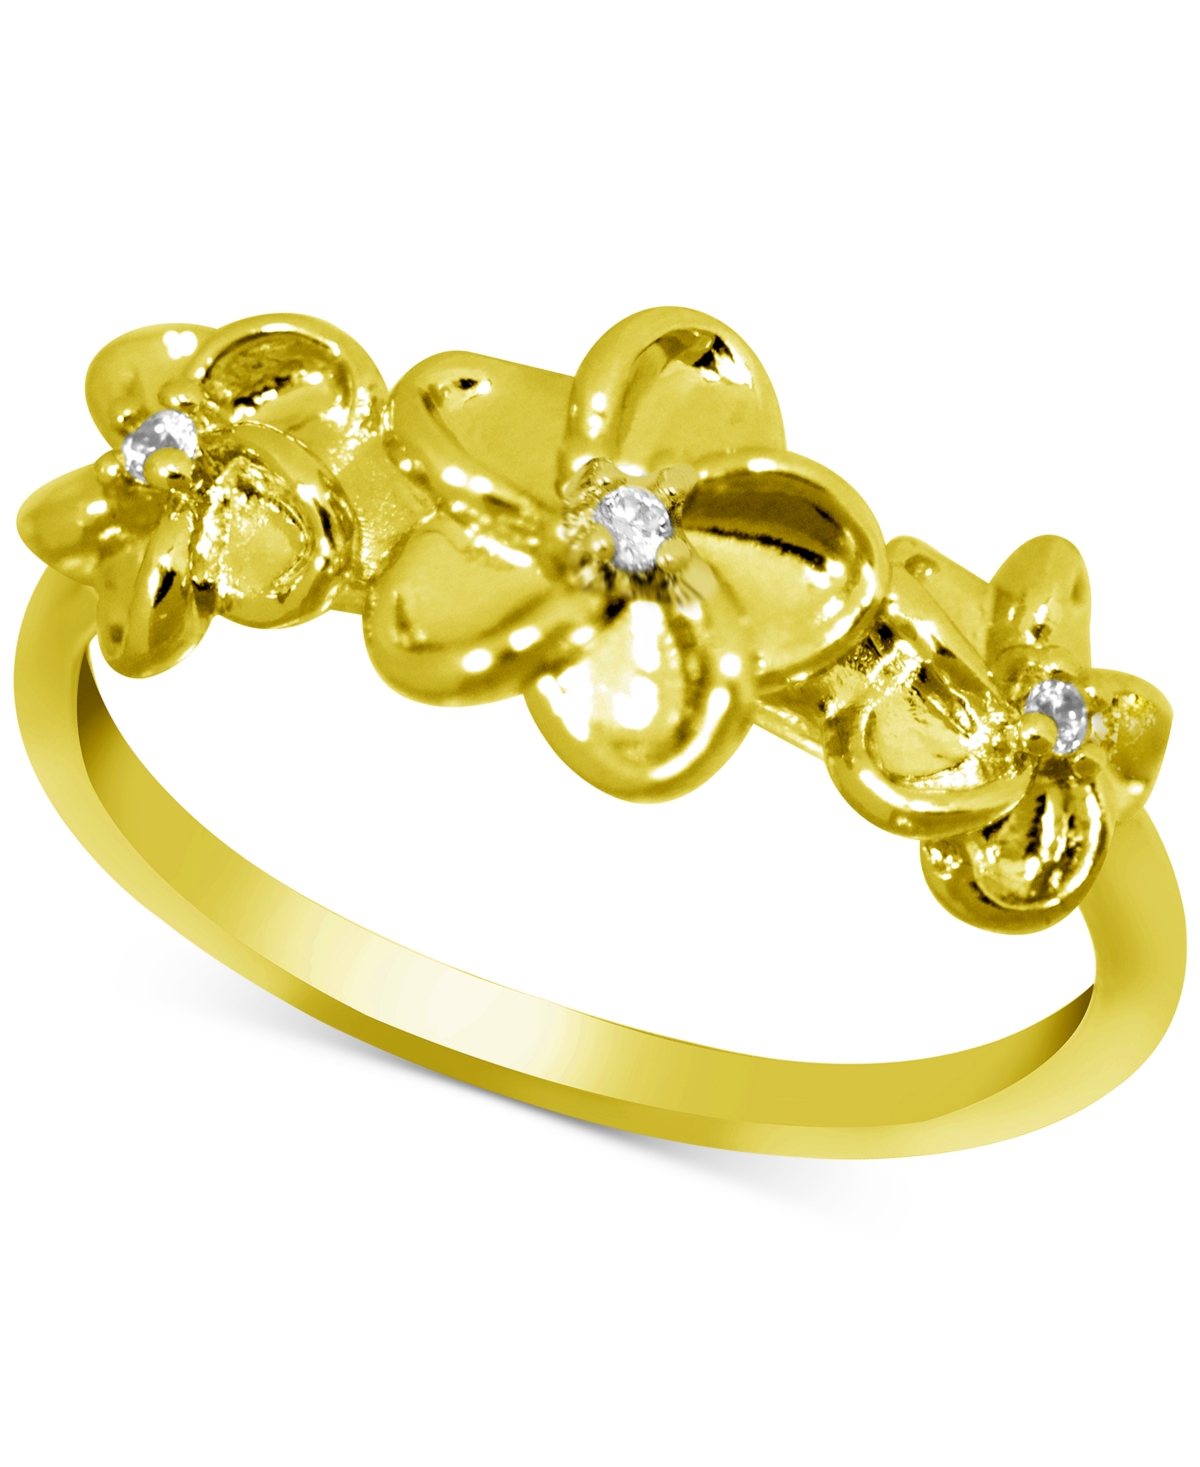 Kona Bay Flower Trio Ring in Gold-Plate